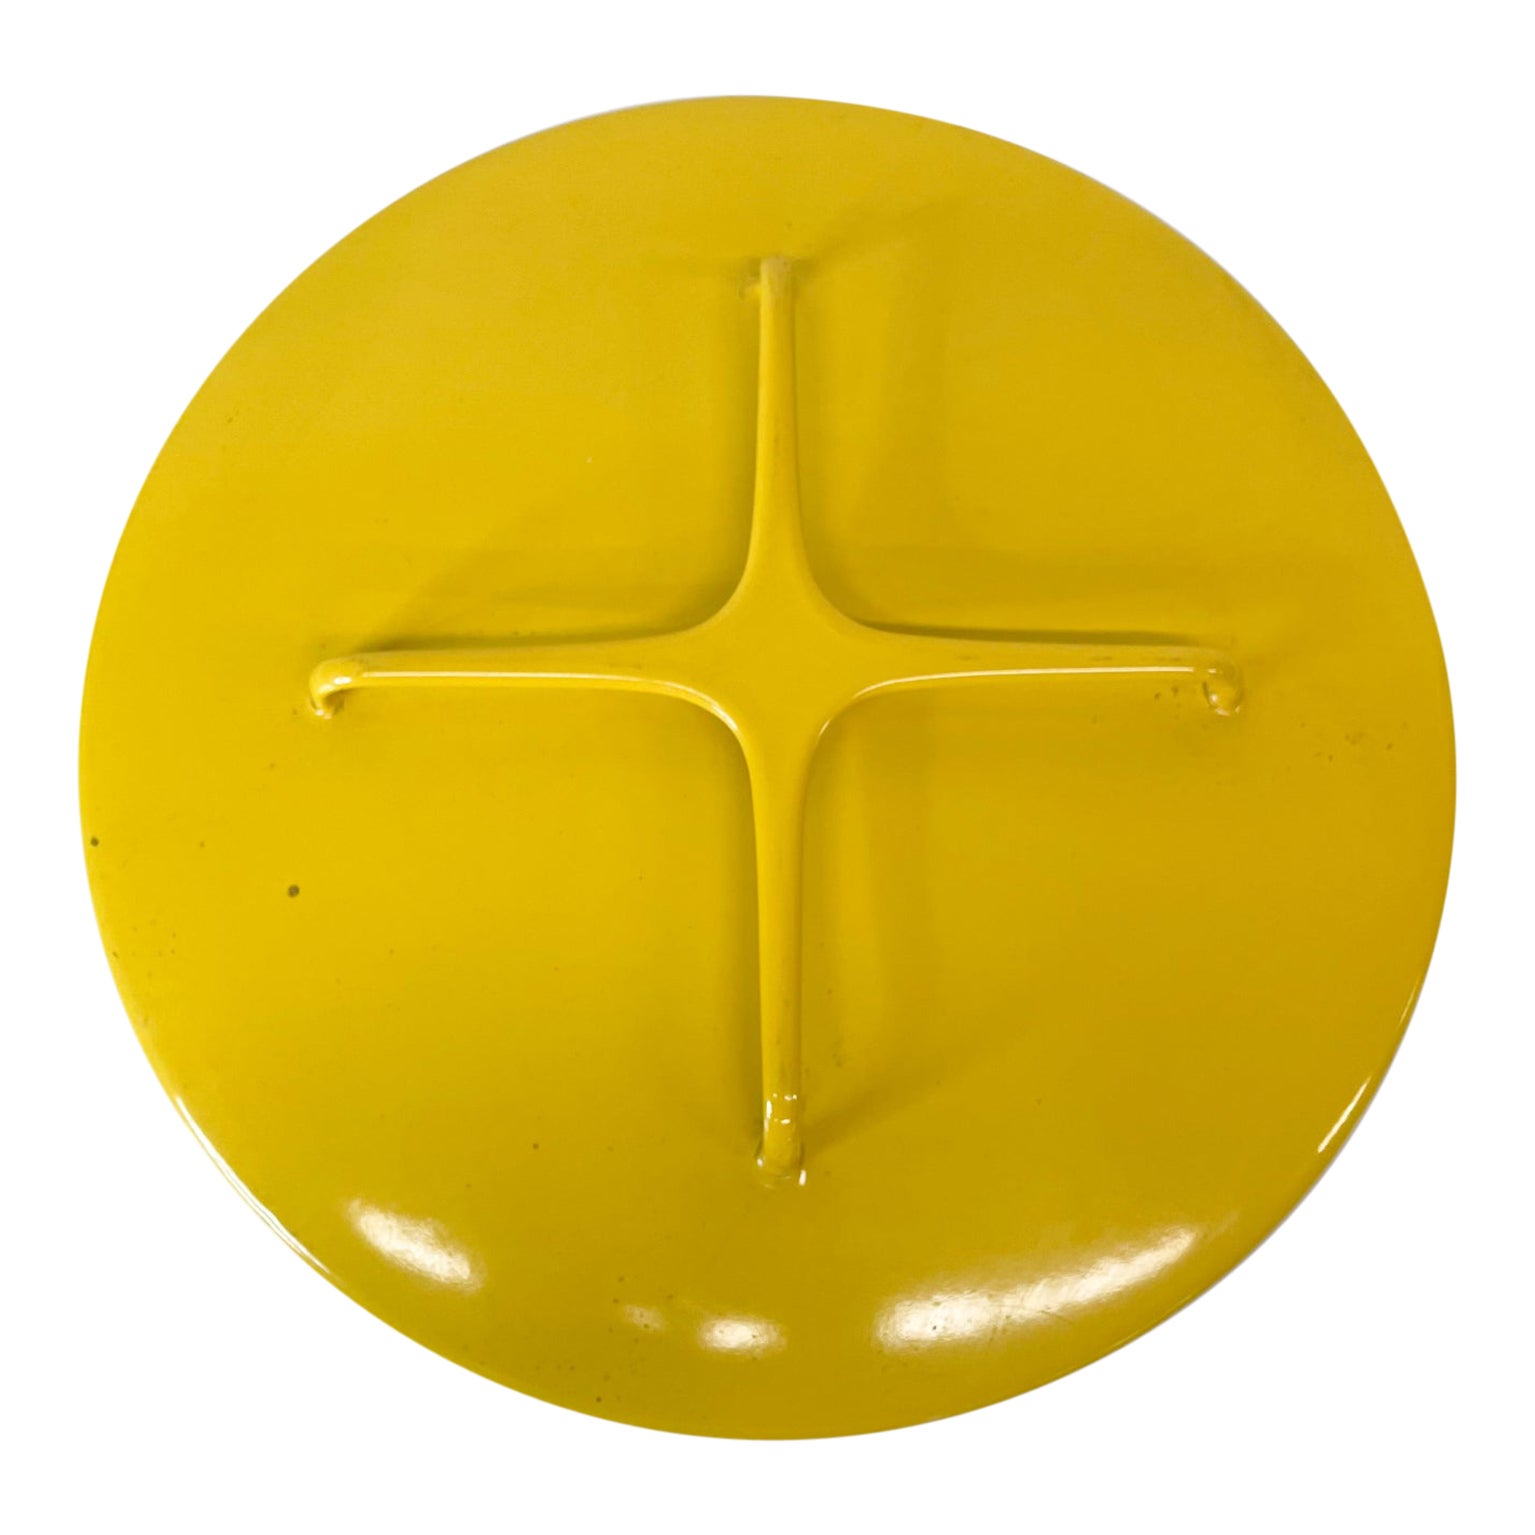 Dansk Designs Yellow Enamelware Casserole Cover Lid Trivet Top IHQ France 1960s